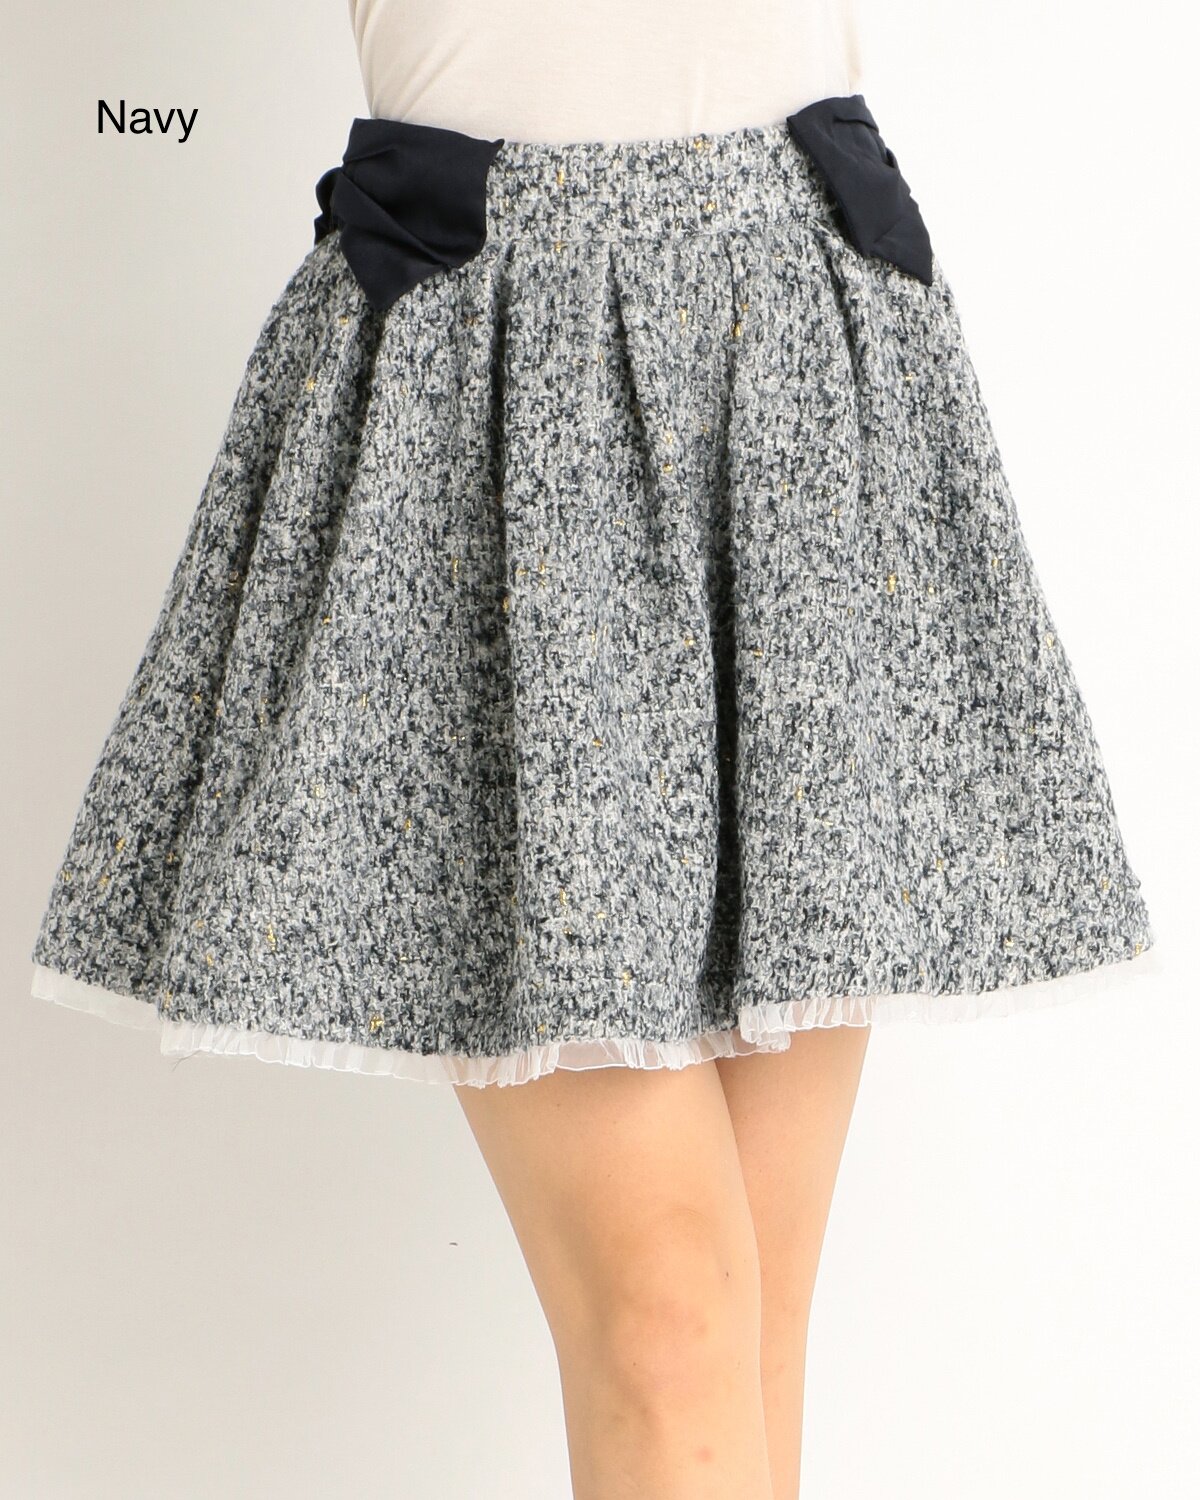 LIZ LISA Tweed Skirt